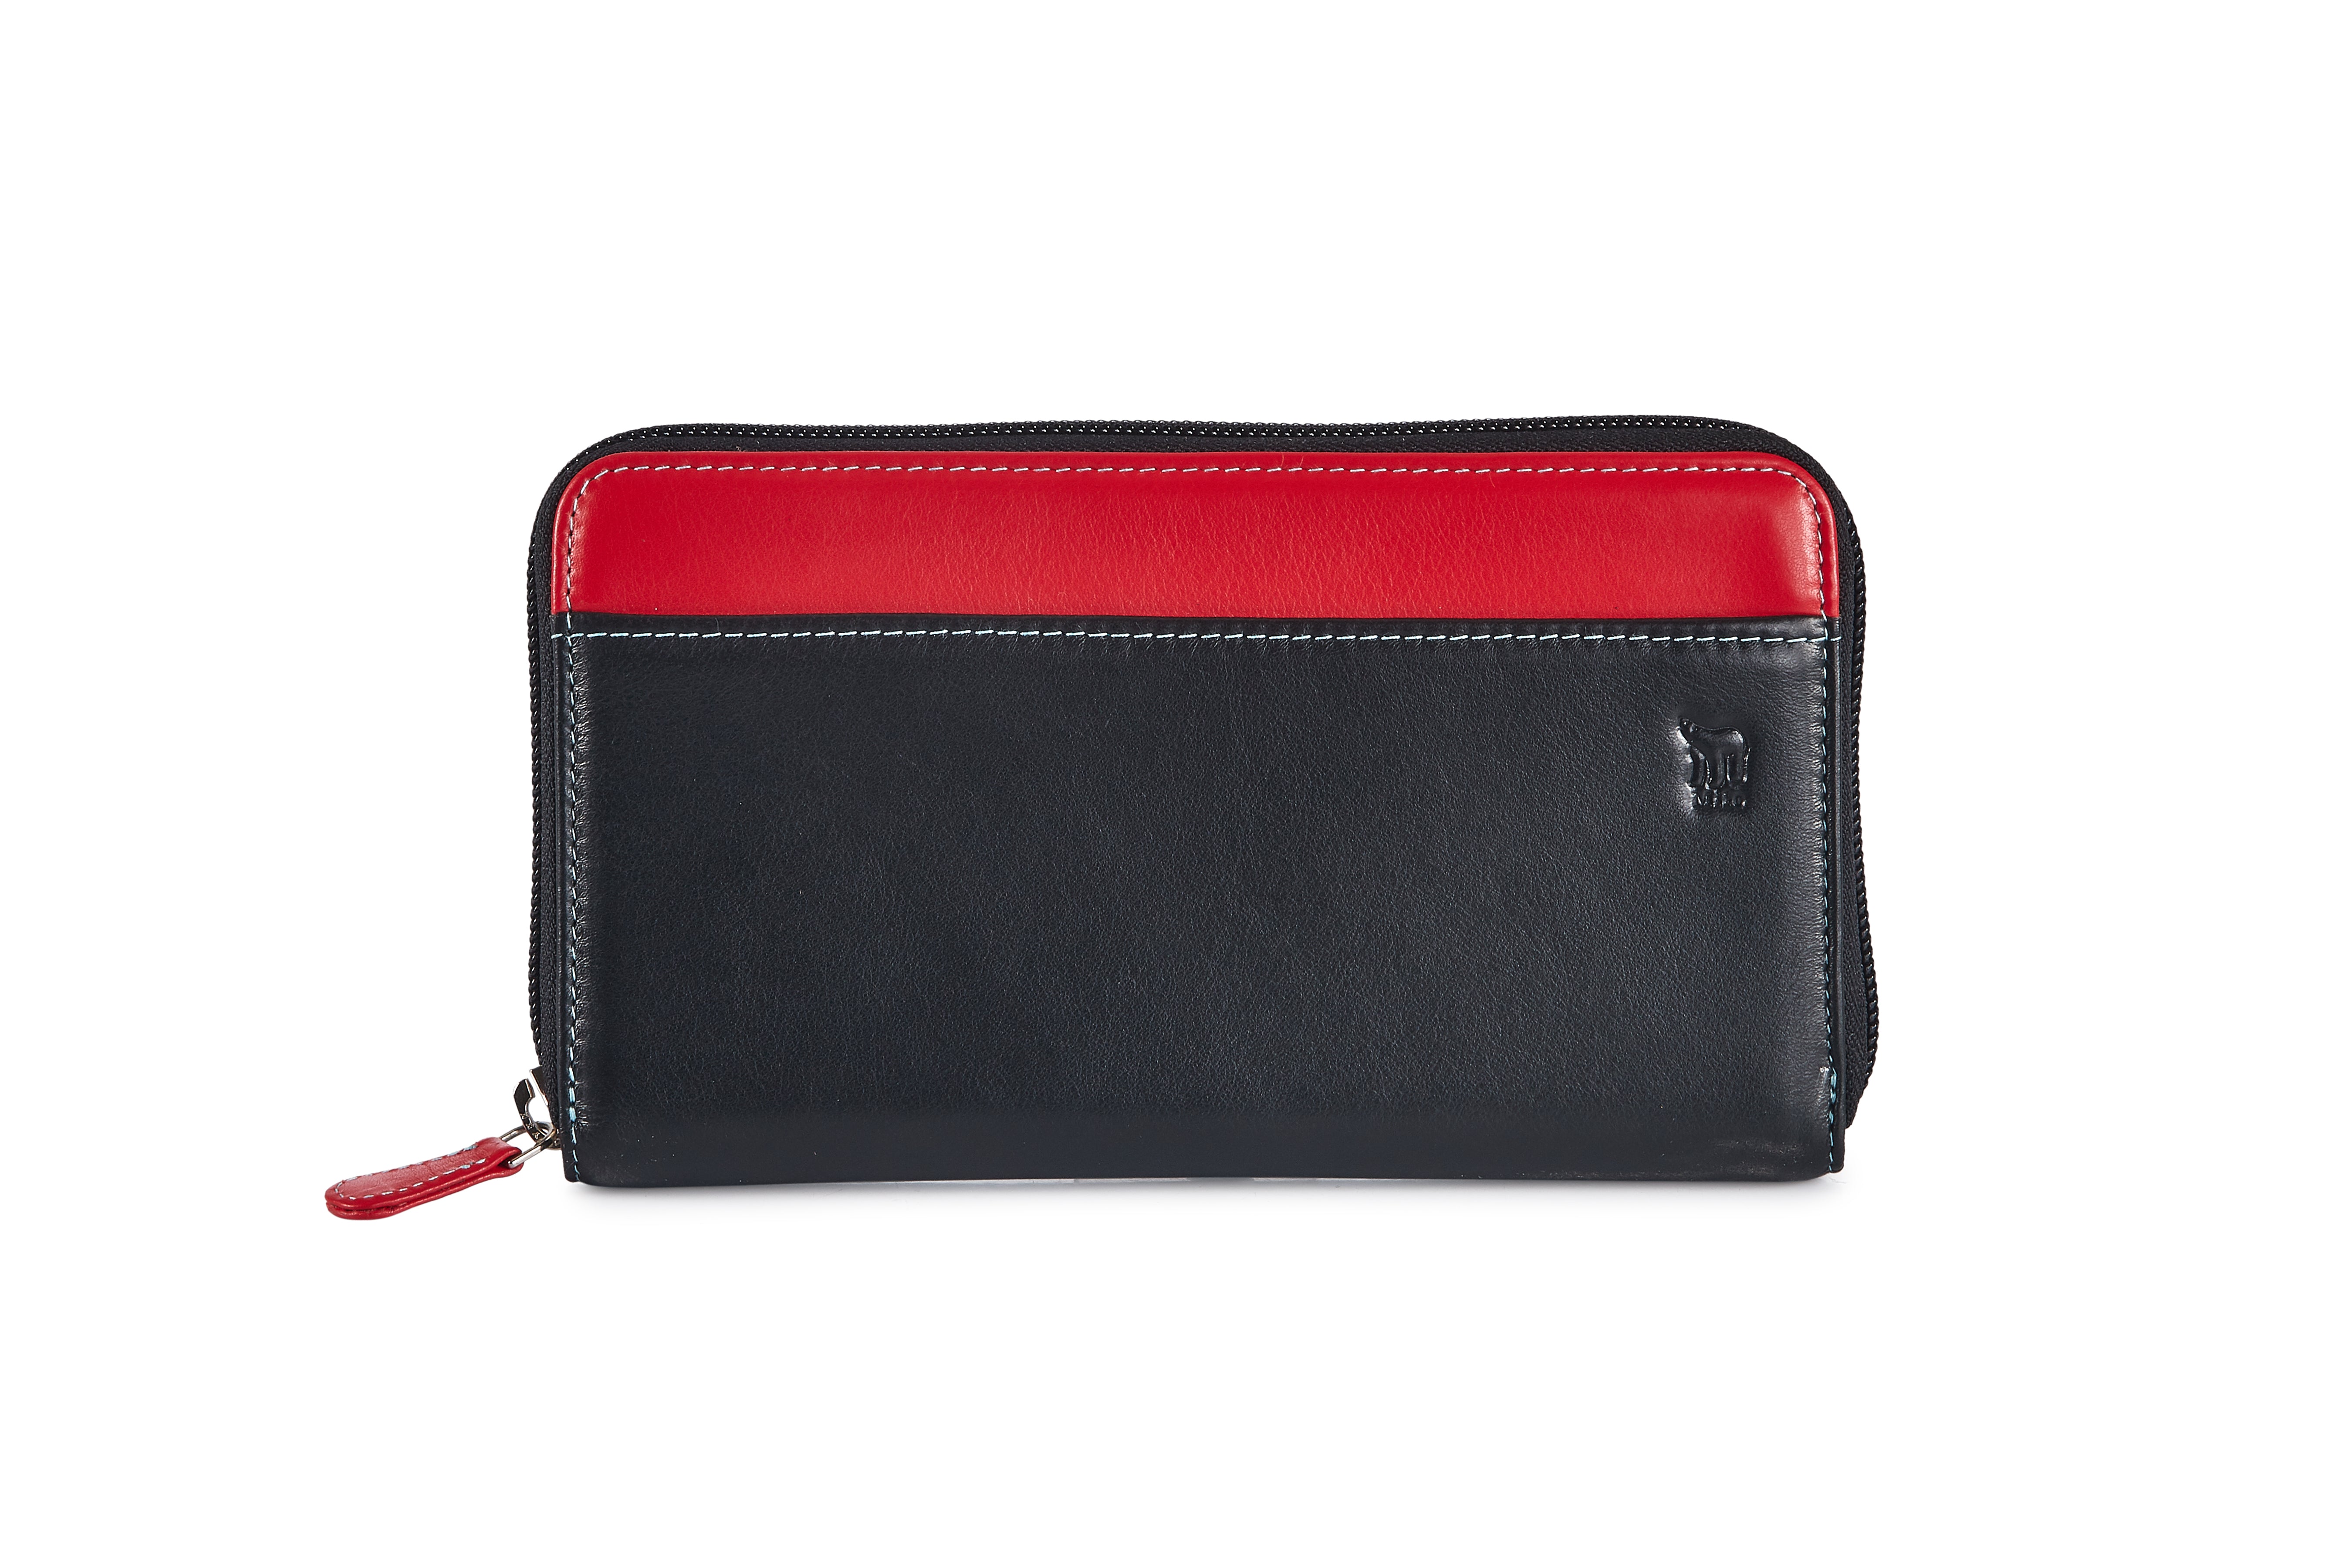 Sarita | Style - 5343, Zip around leather wallets